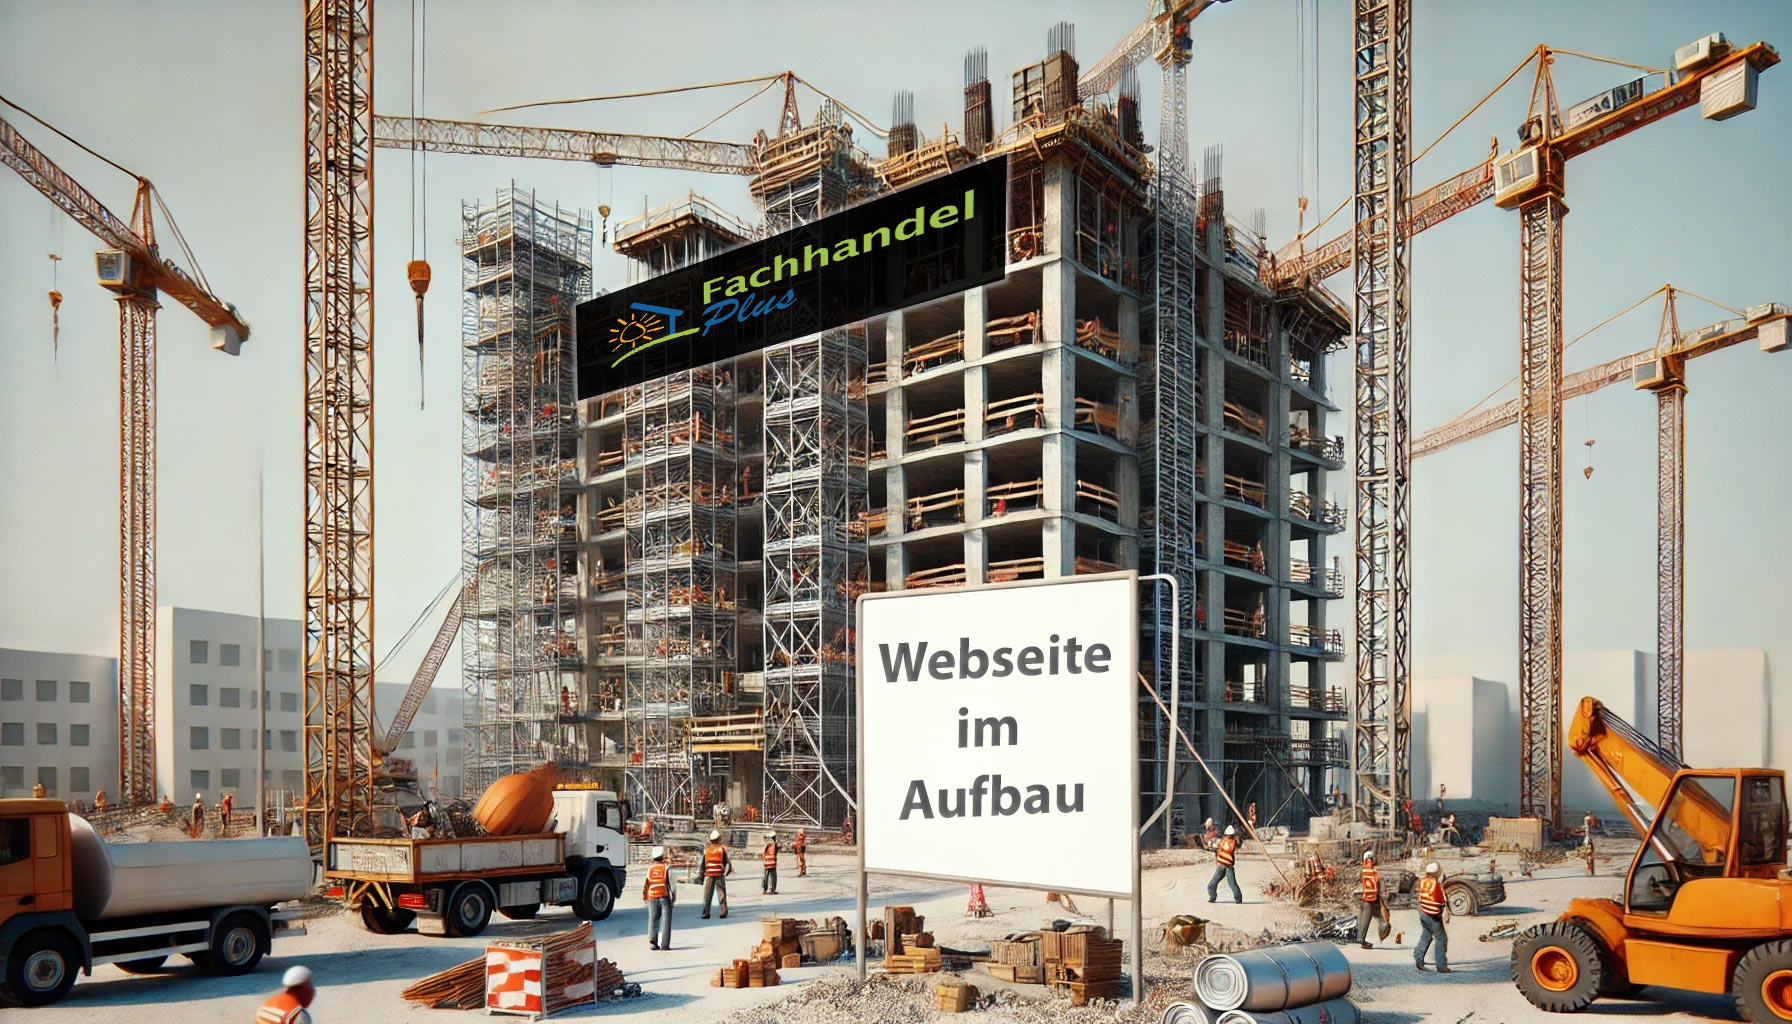 Fachhandel-Plus Website under construction